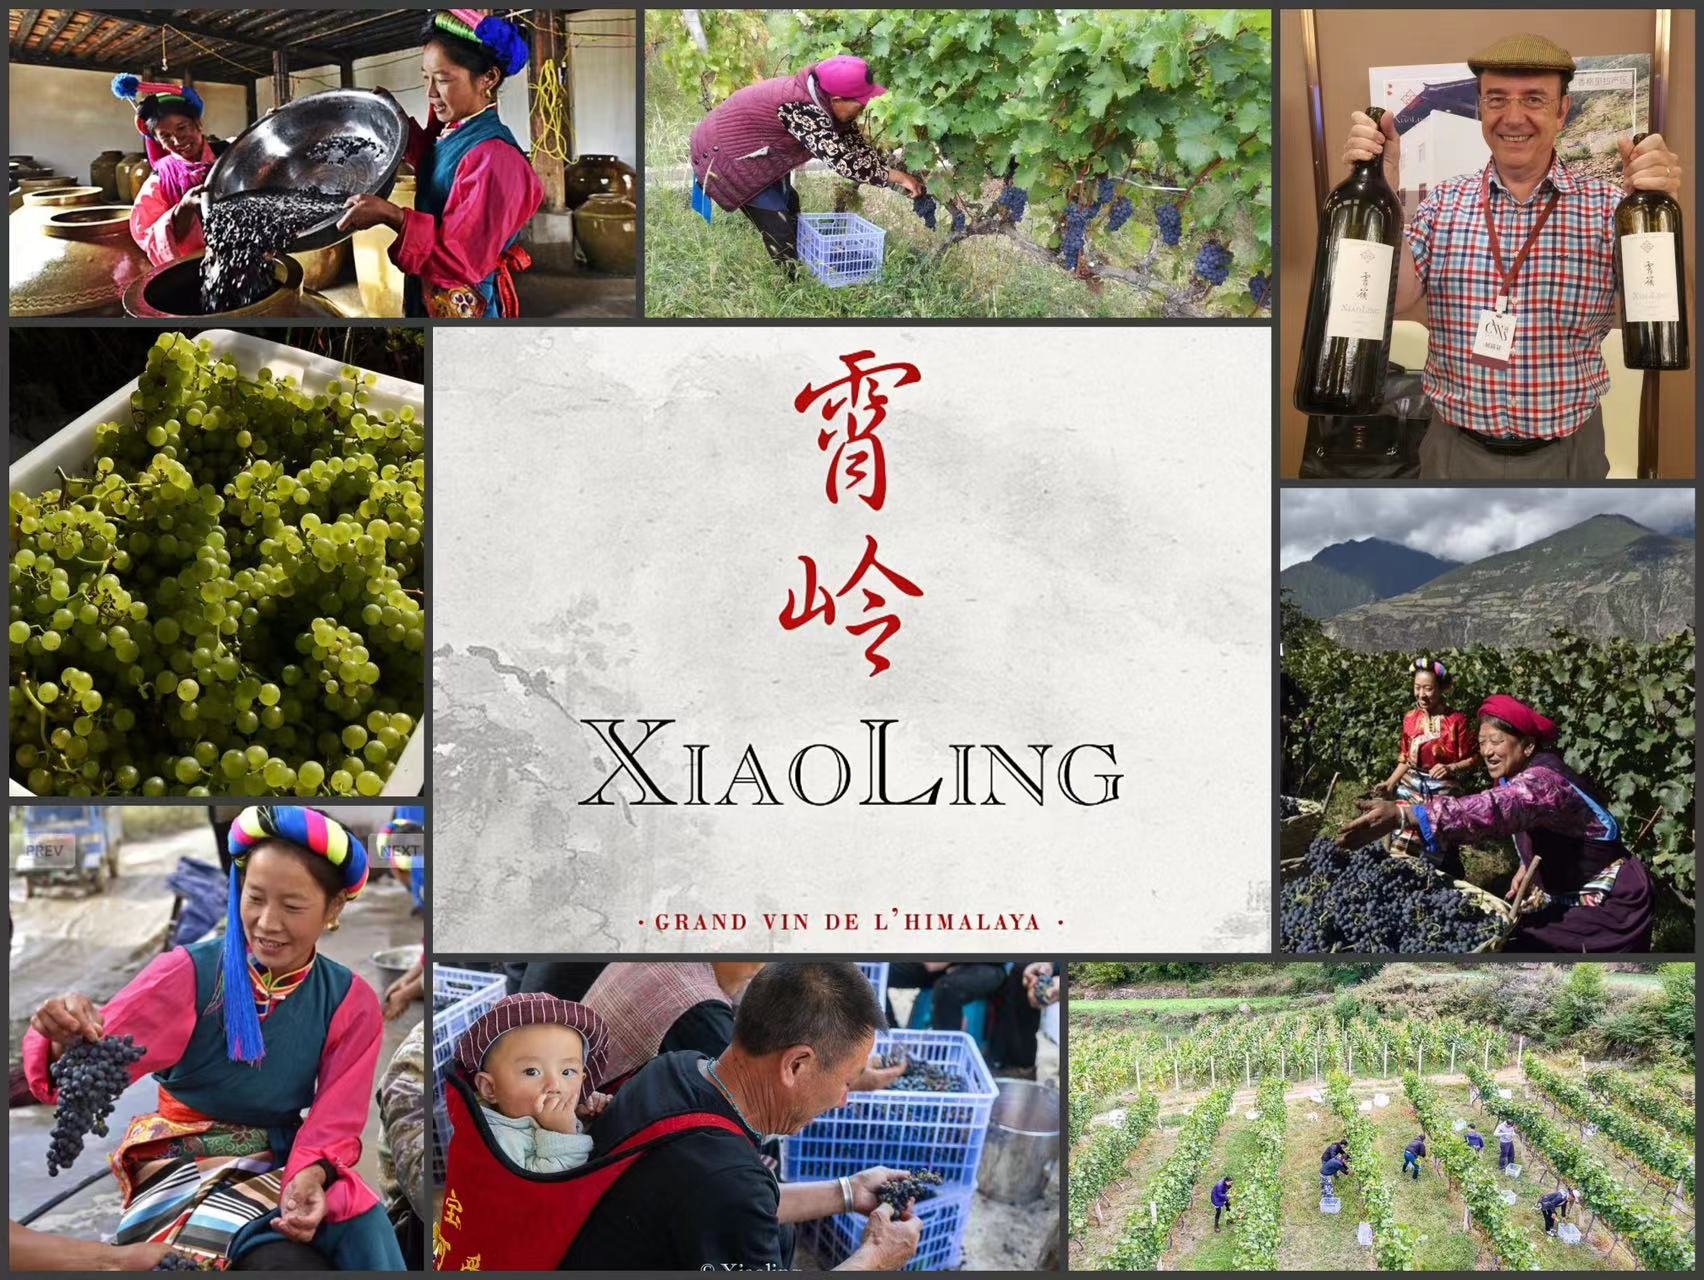 Bertrand Cristau: His wine brand ‘霄嶺 [Xiāolǐng]’ operates by renting vineyards and manpower from local Tibetan farmers.